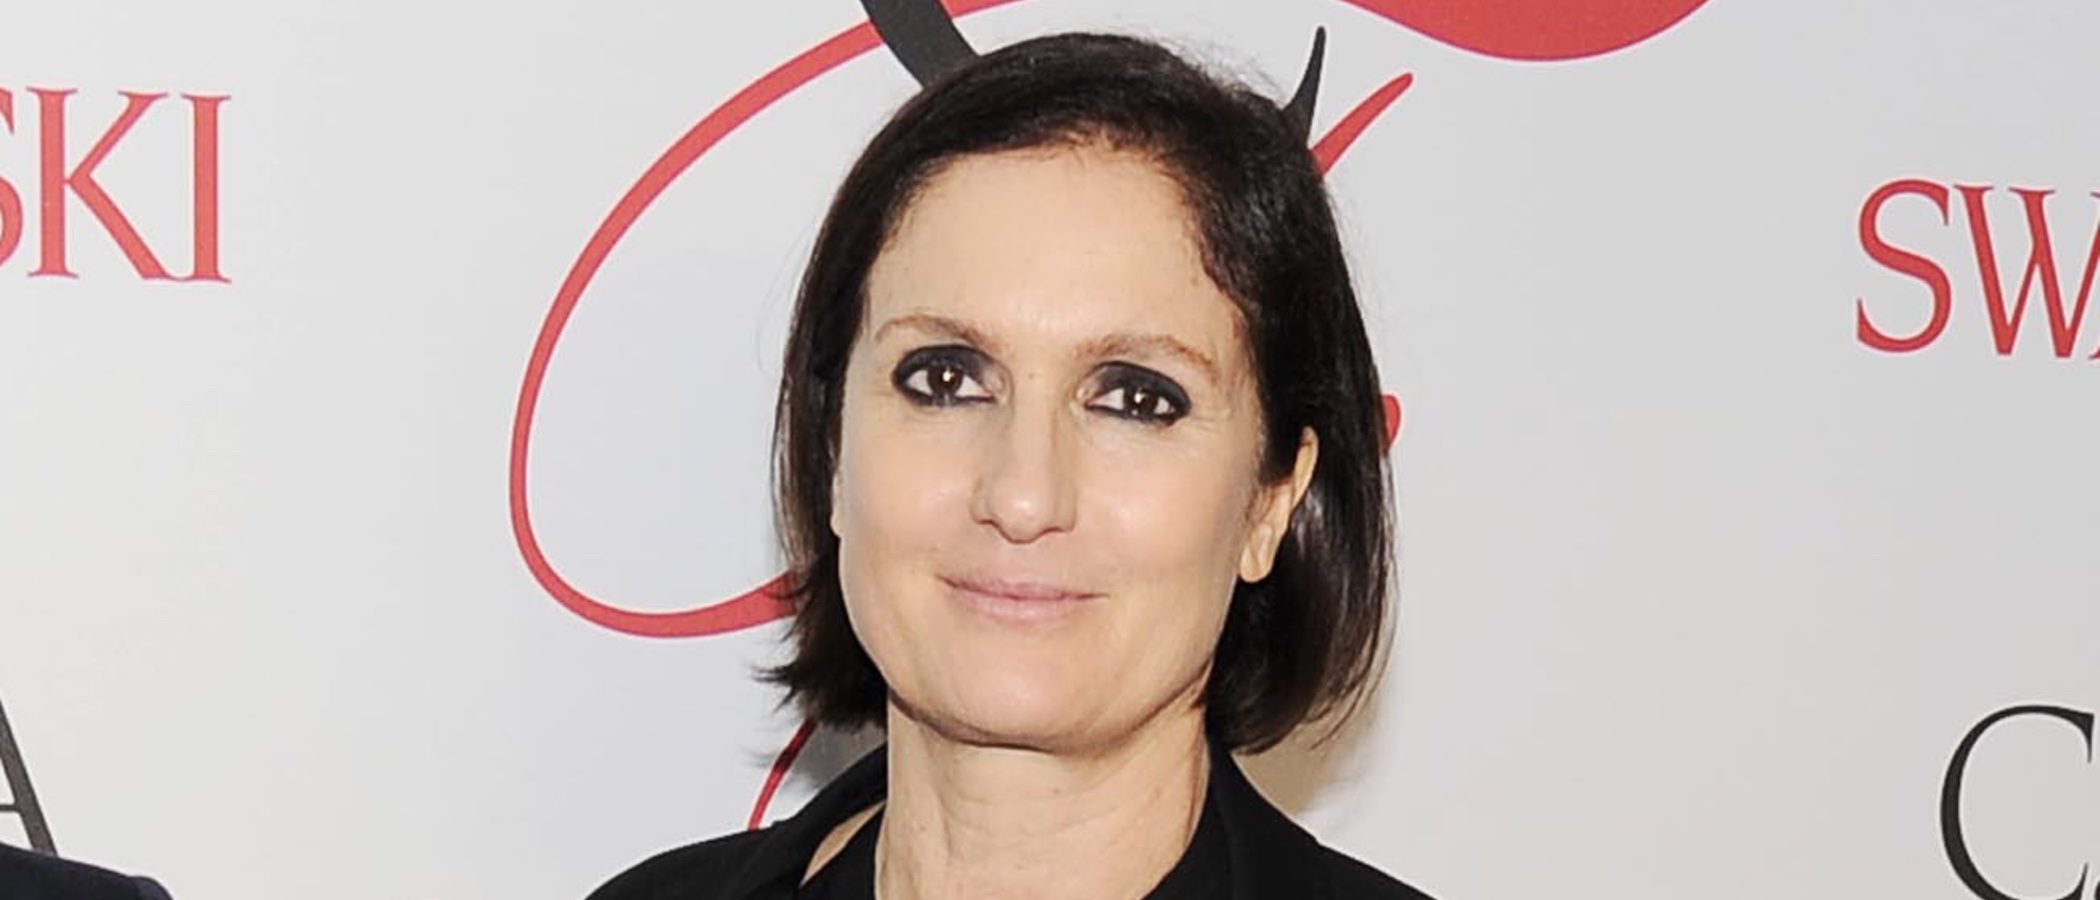 Dior ficha a Maria Grazia Chiuri como directora creativa tras la salida de Raf Simons